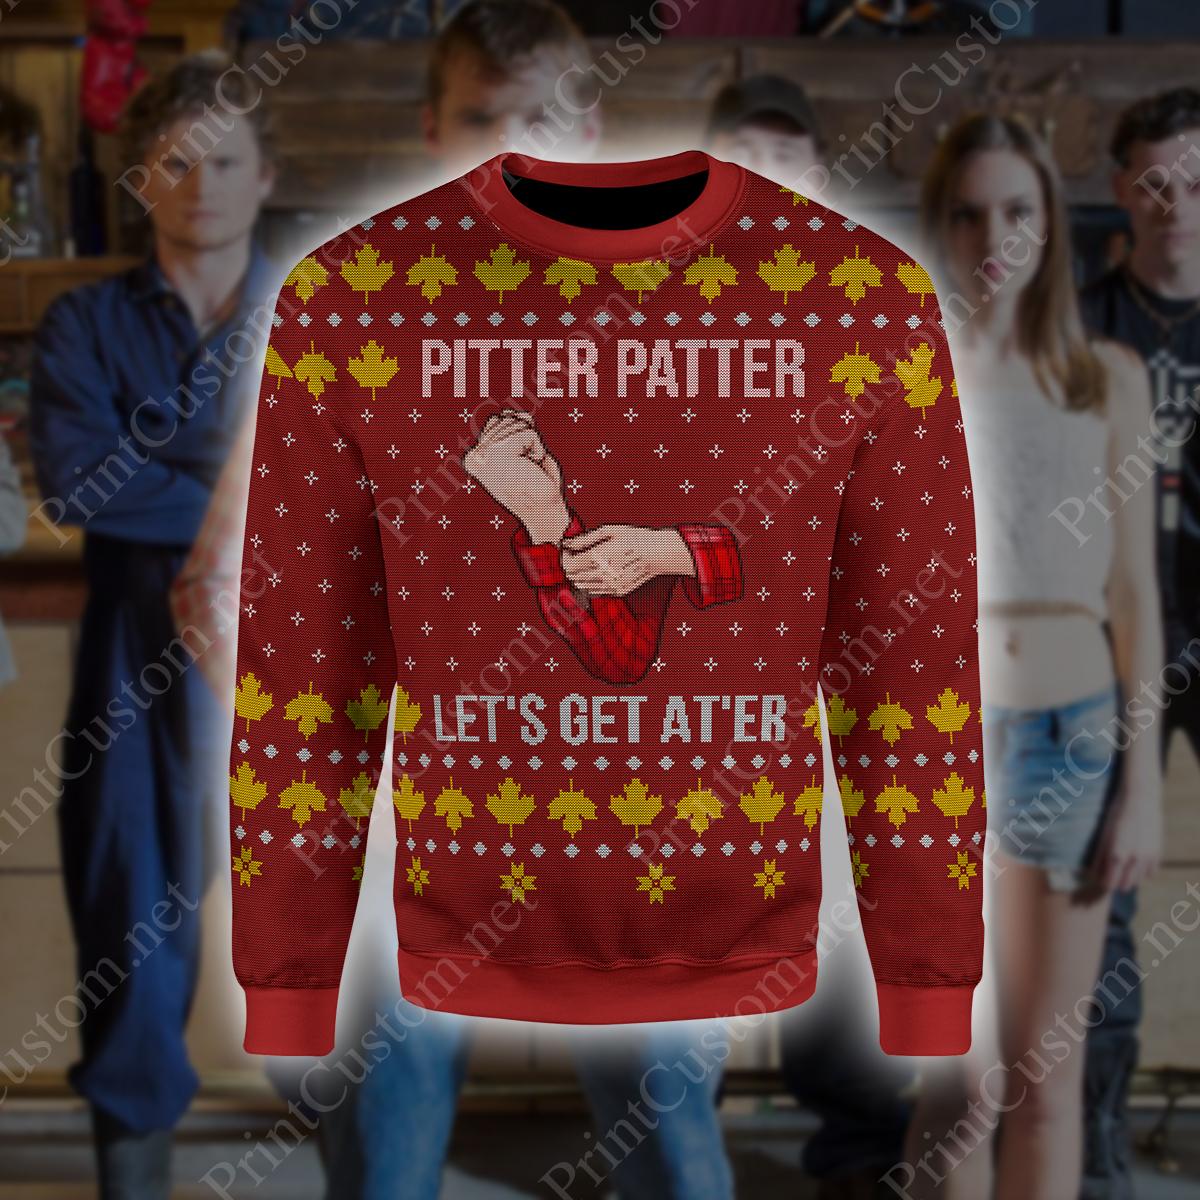 Letterkenny pitter patter let's get at'er ugly christmas sweater - 4